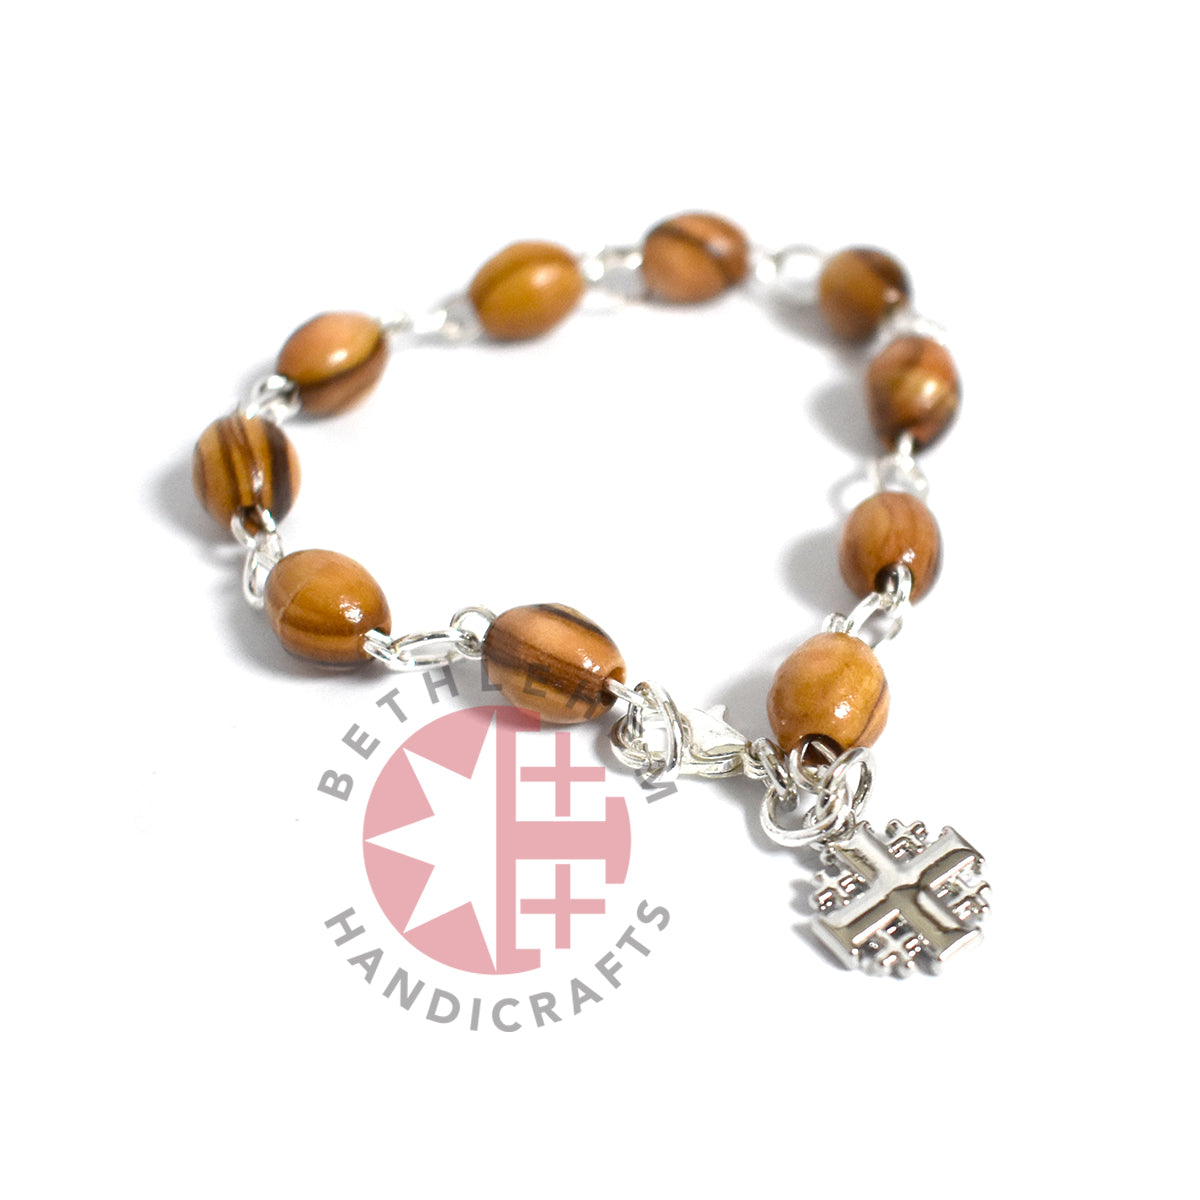 Bracelet with Jerusalem Cross Pendant, Wooden 8*6 mm Rosary